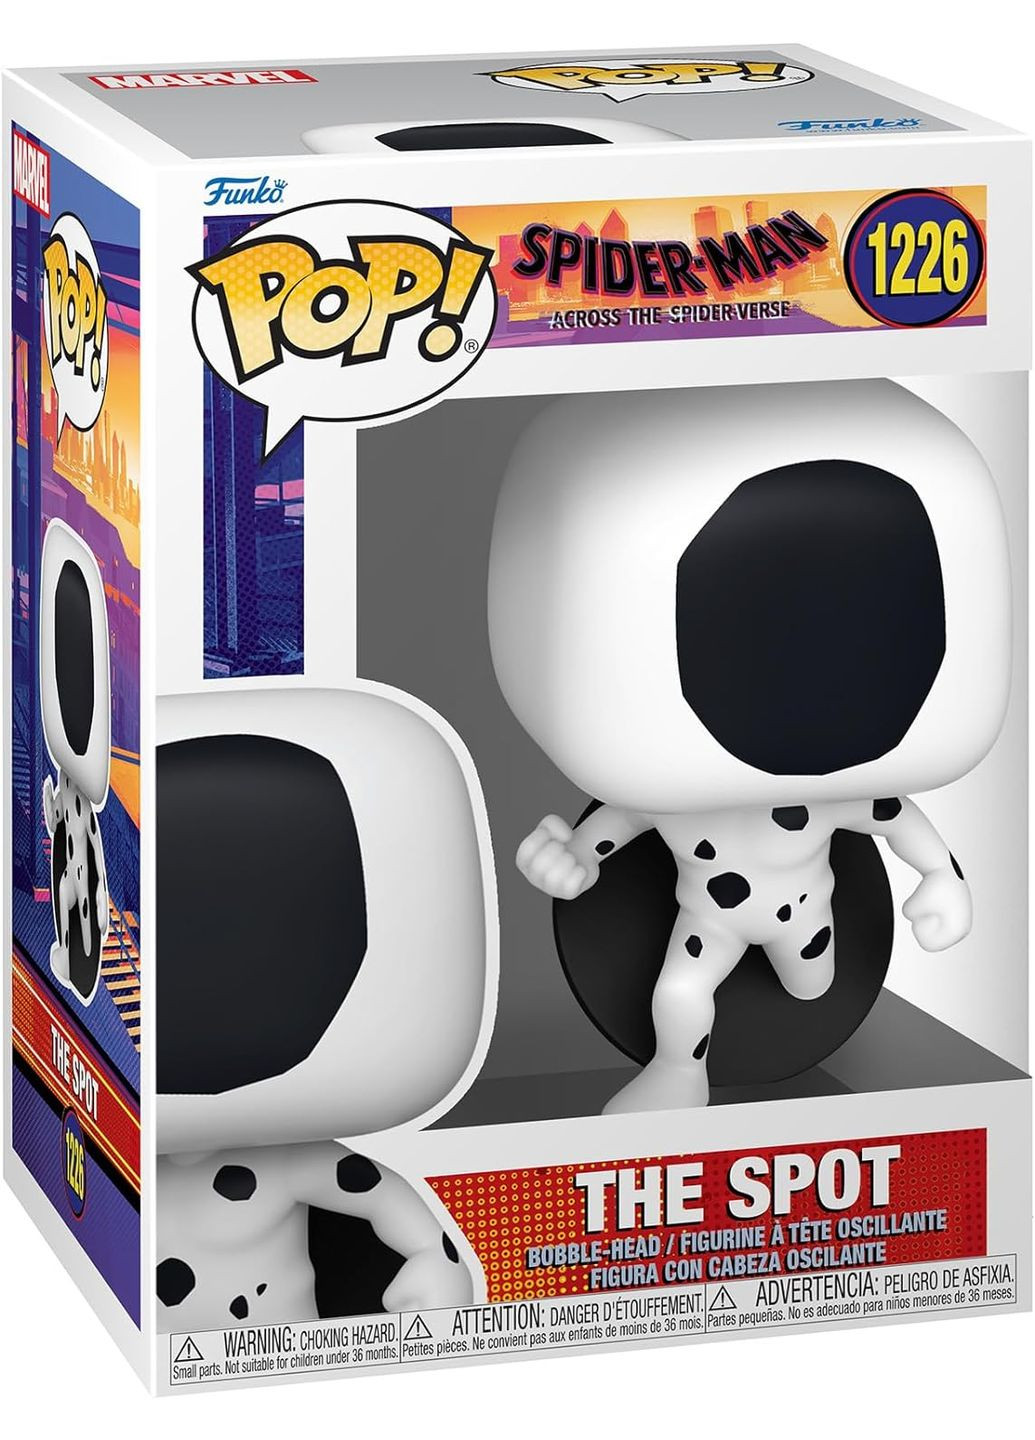 Спайдер мен фигурка Marvel Фанко Spider Man The Spot Пятно детская игровая фигурка #1226 Funko Pop (293850629)